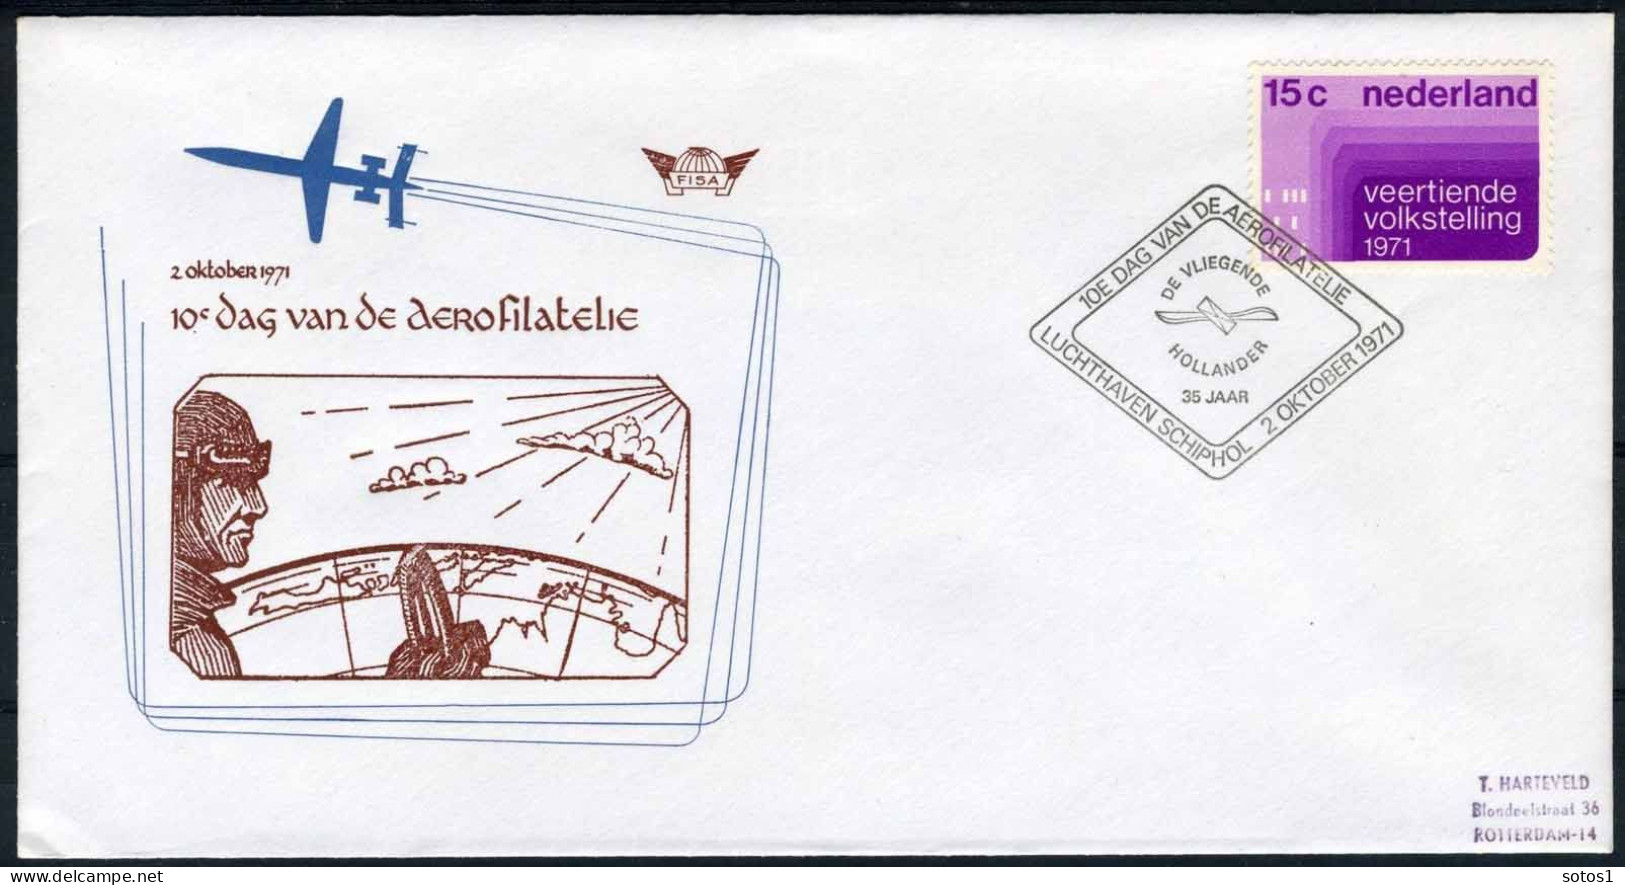 NEDERLAND 10e DAG VAN DE AEROFILATELIE 2/10/1971 -1 - Airmail